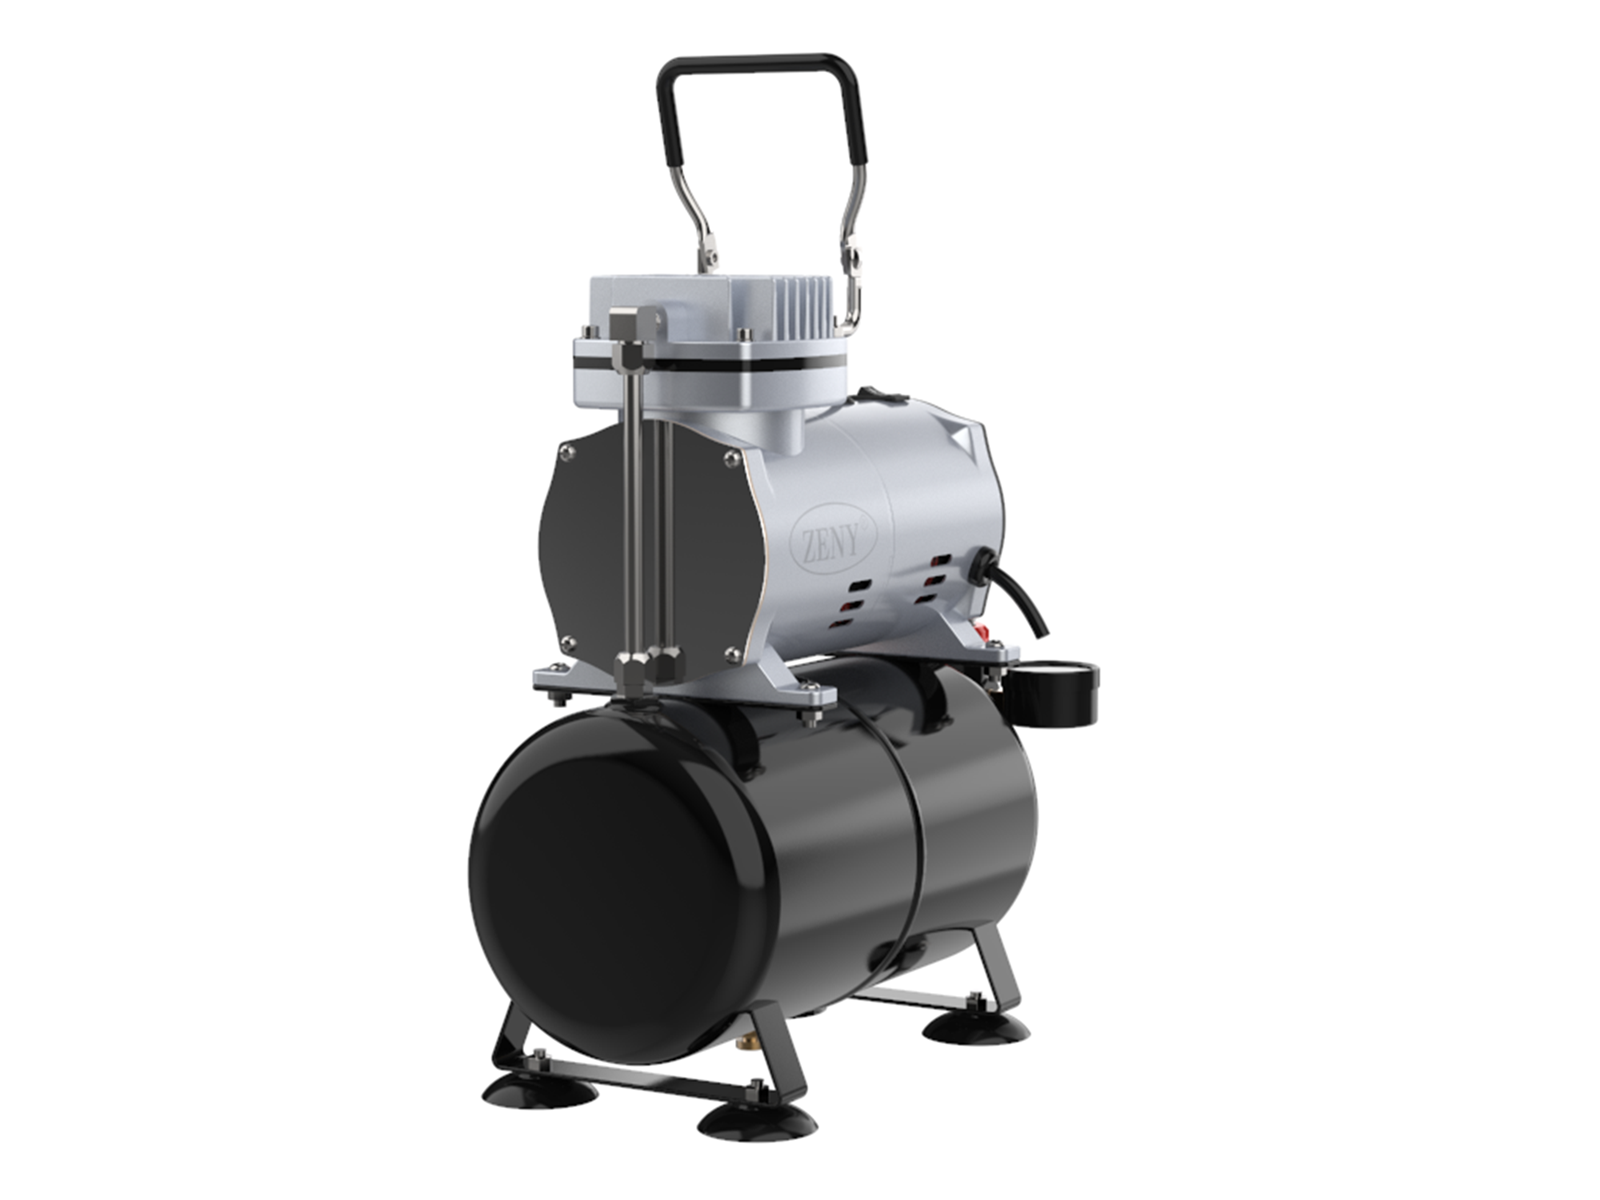 ZENSTYLE Airbrush Air Compressor with Pressure Regulator Gauge,1/5 